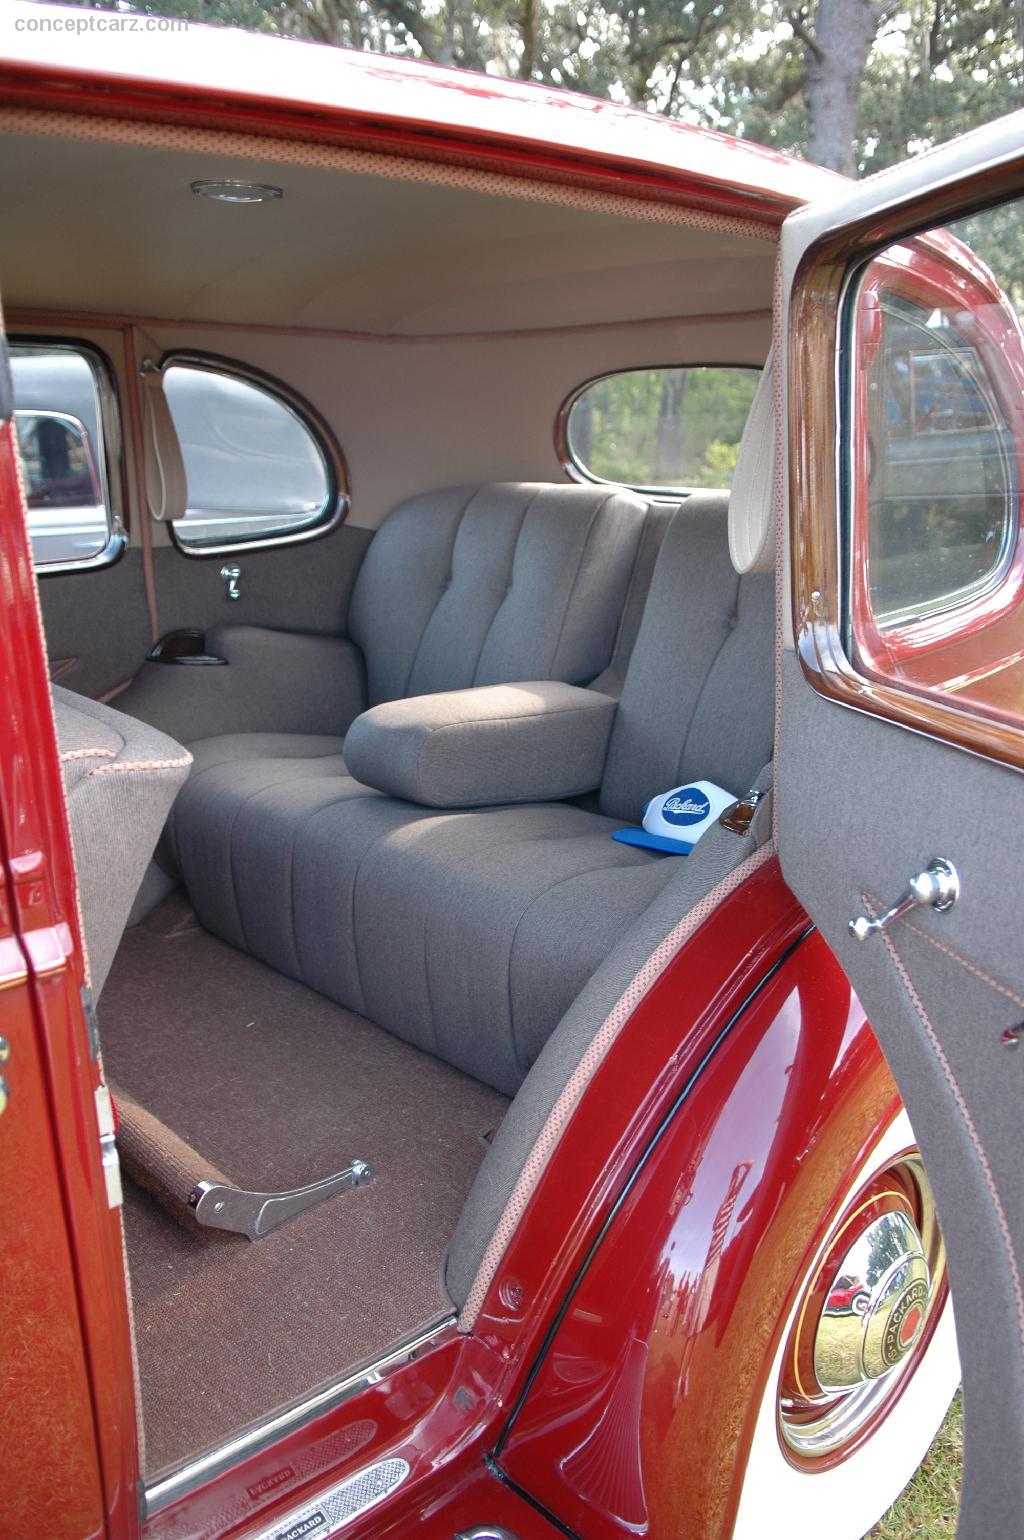 Packard Touring sedan